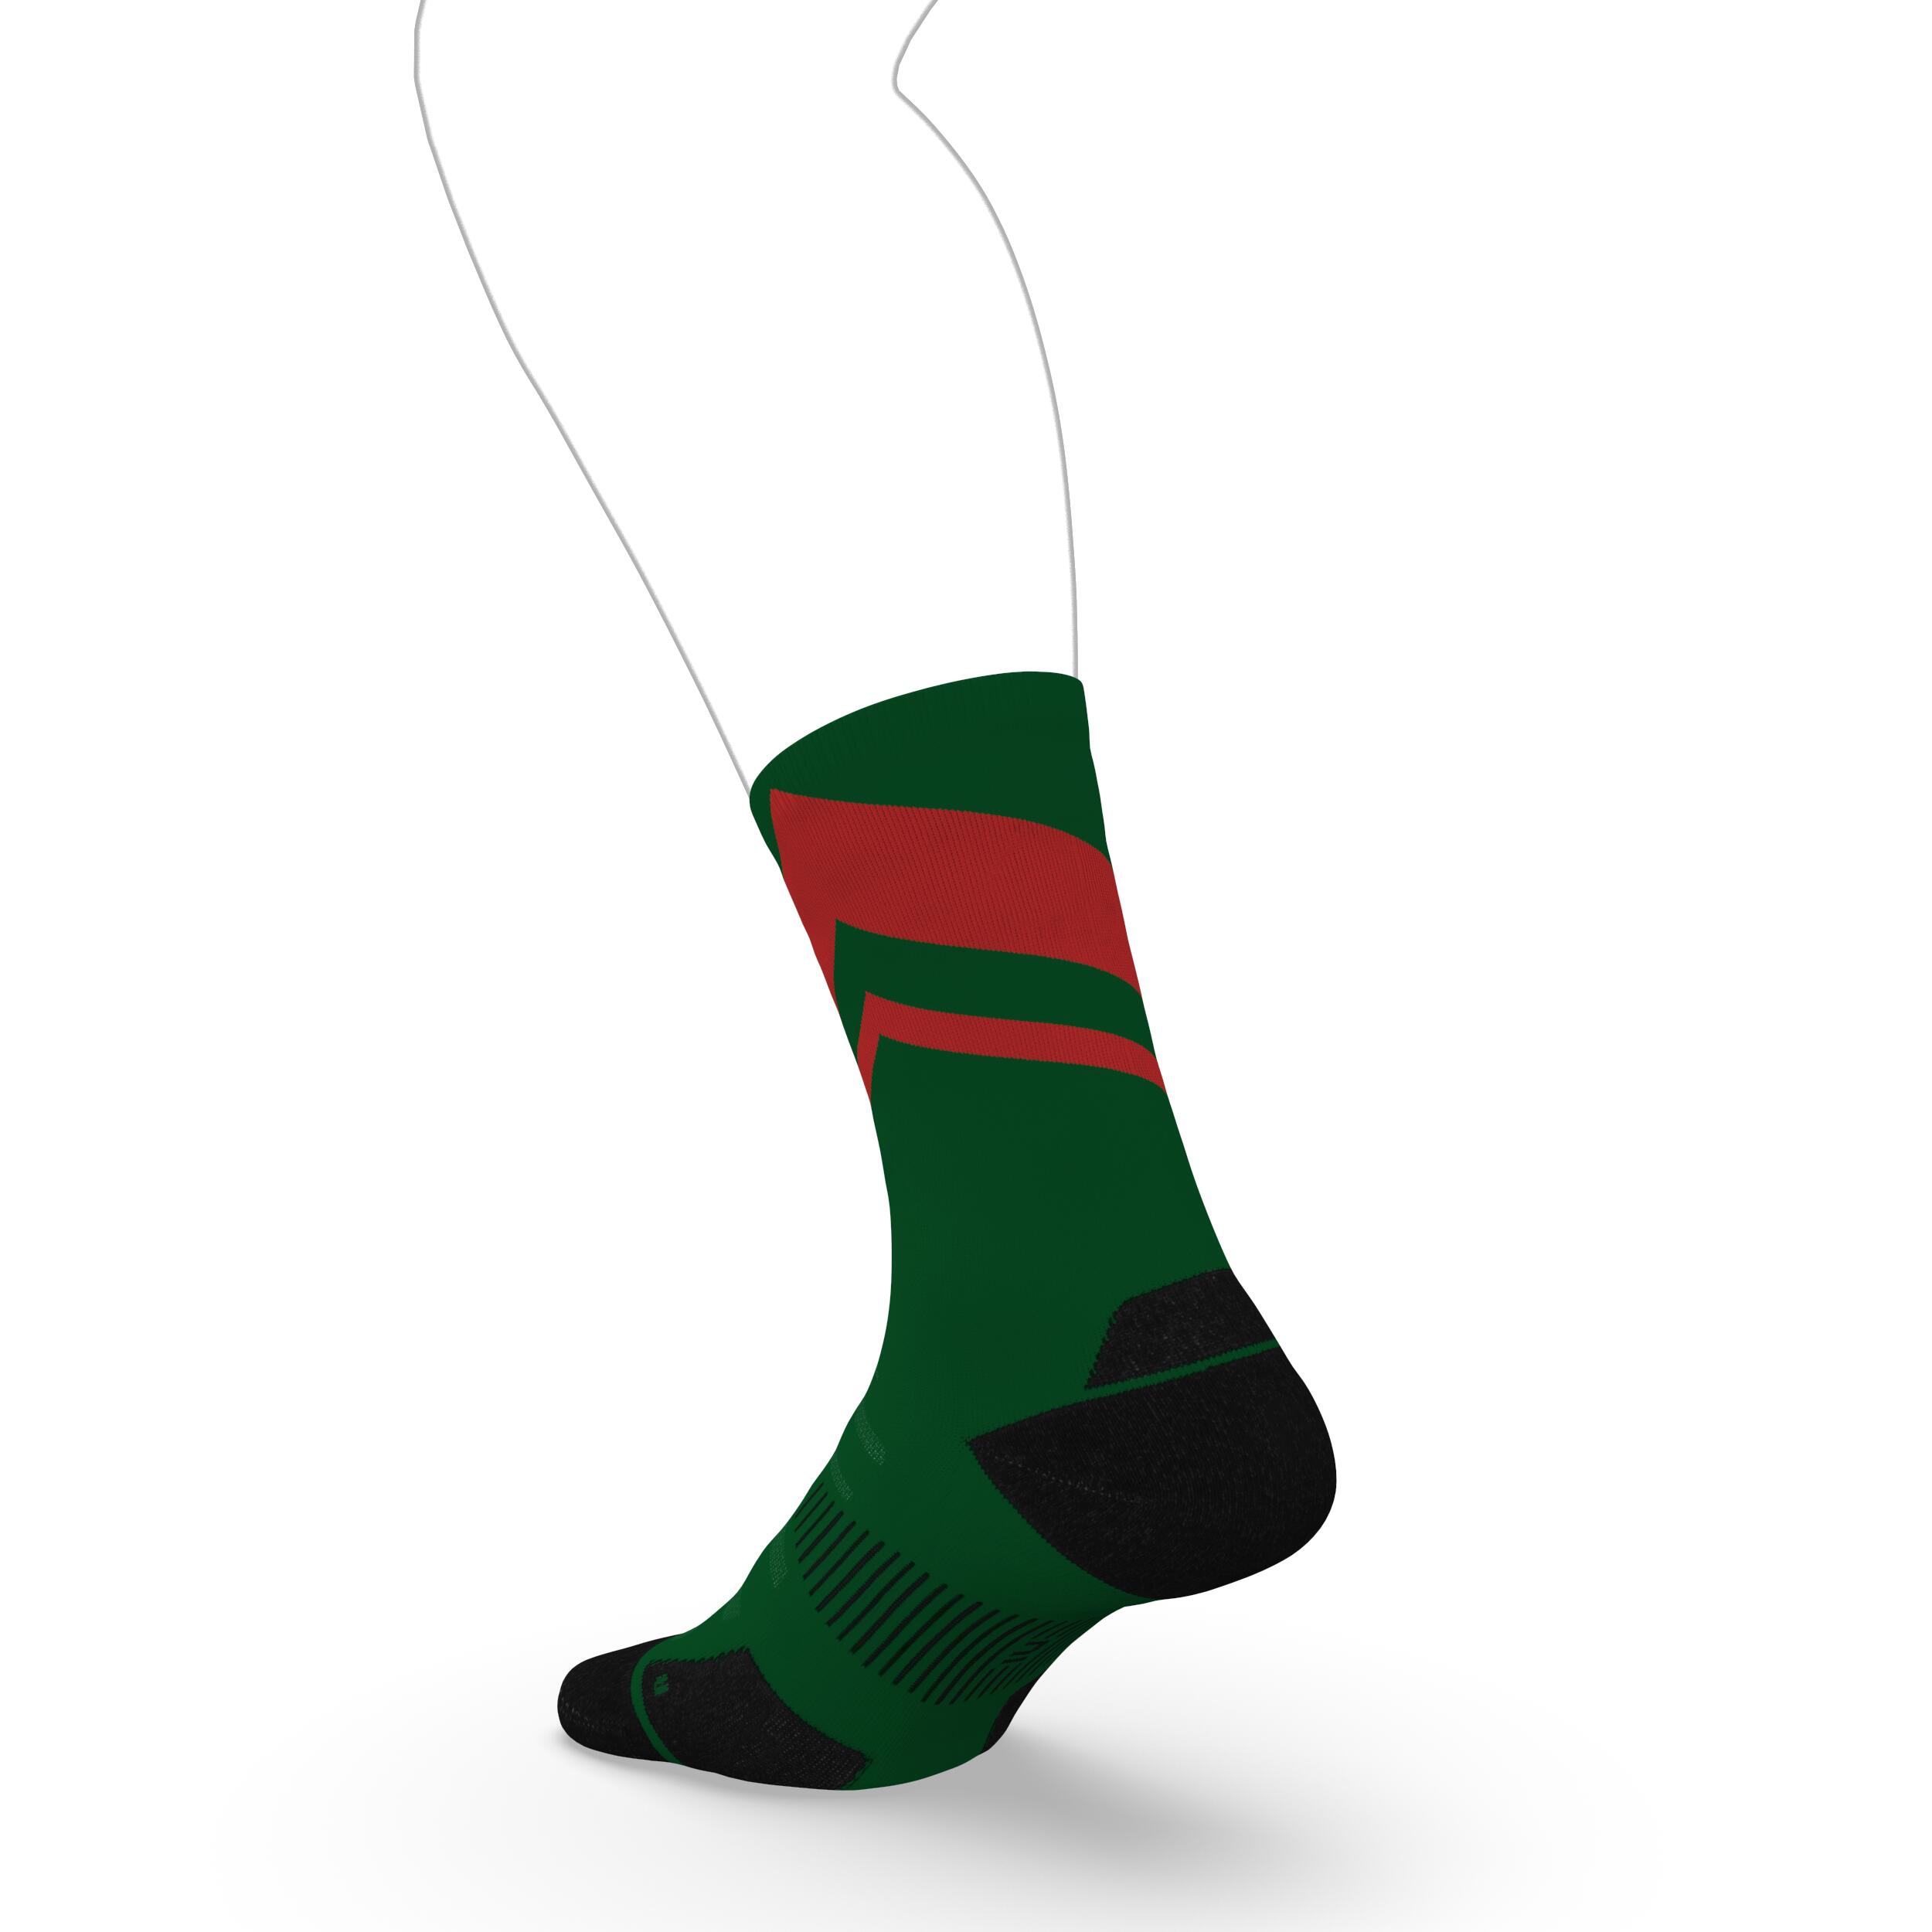 Run900 Mid-Calf Thick Running Socks - Green/Red 3/7